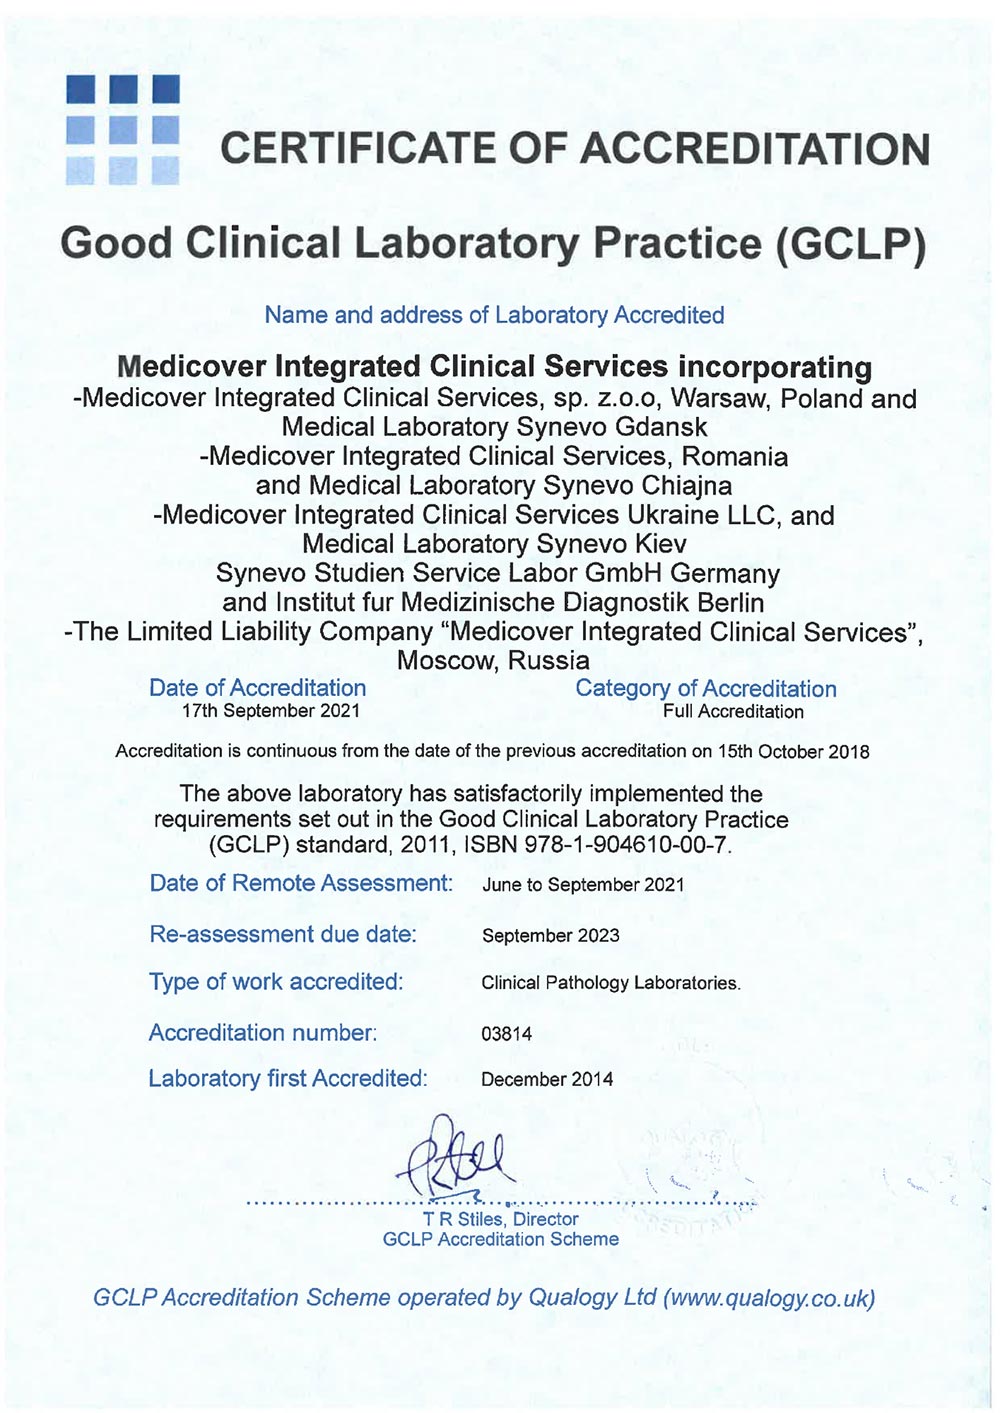 GCLP Accreditation Certificate 2021